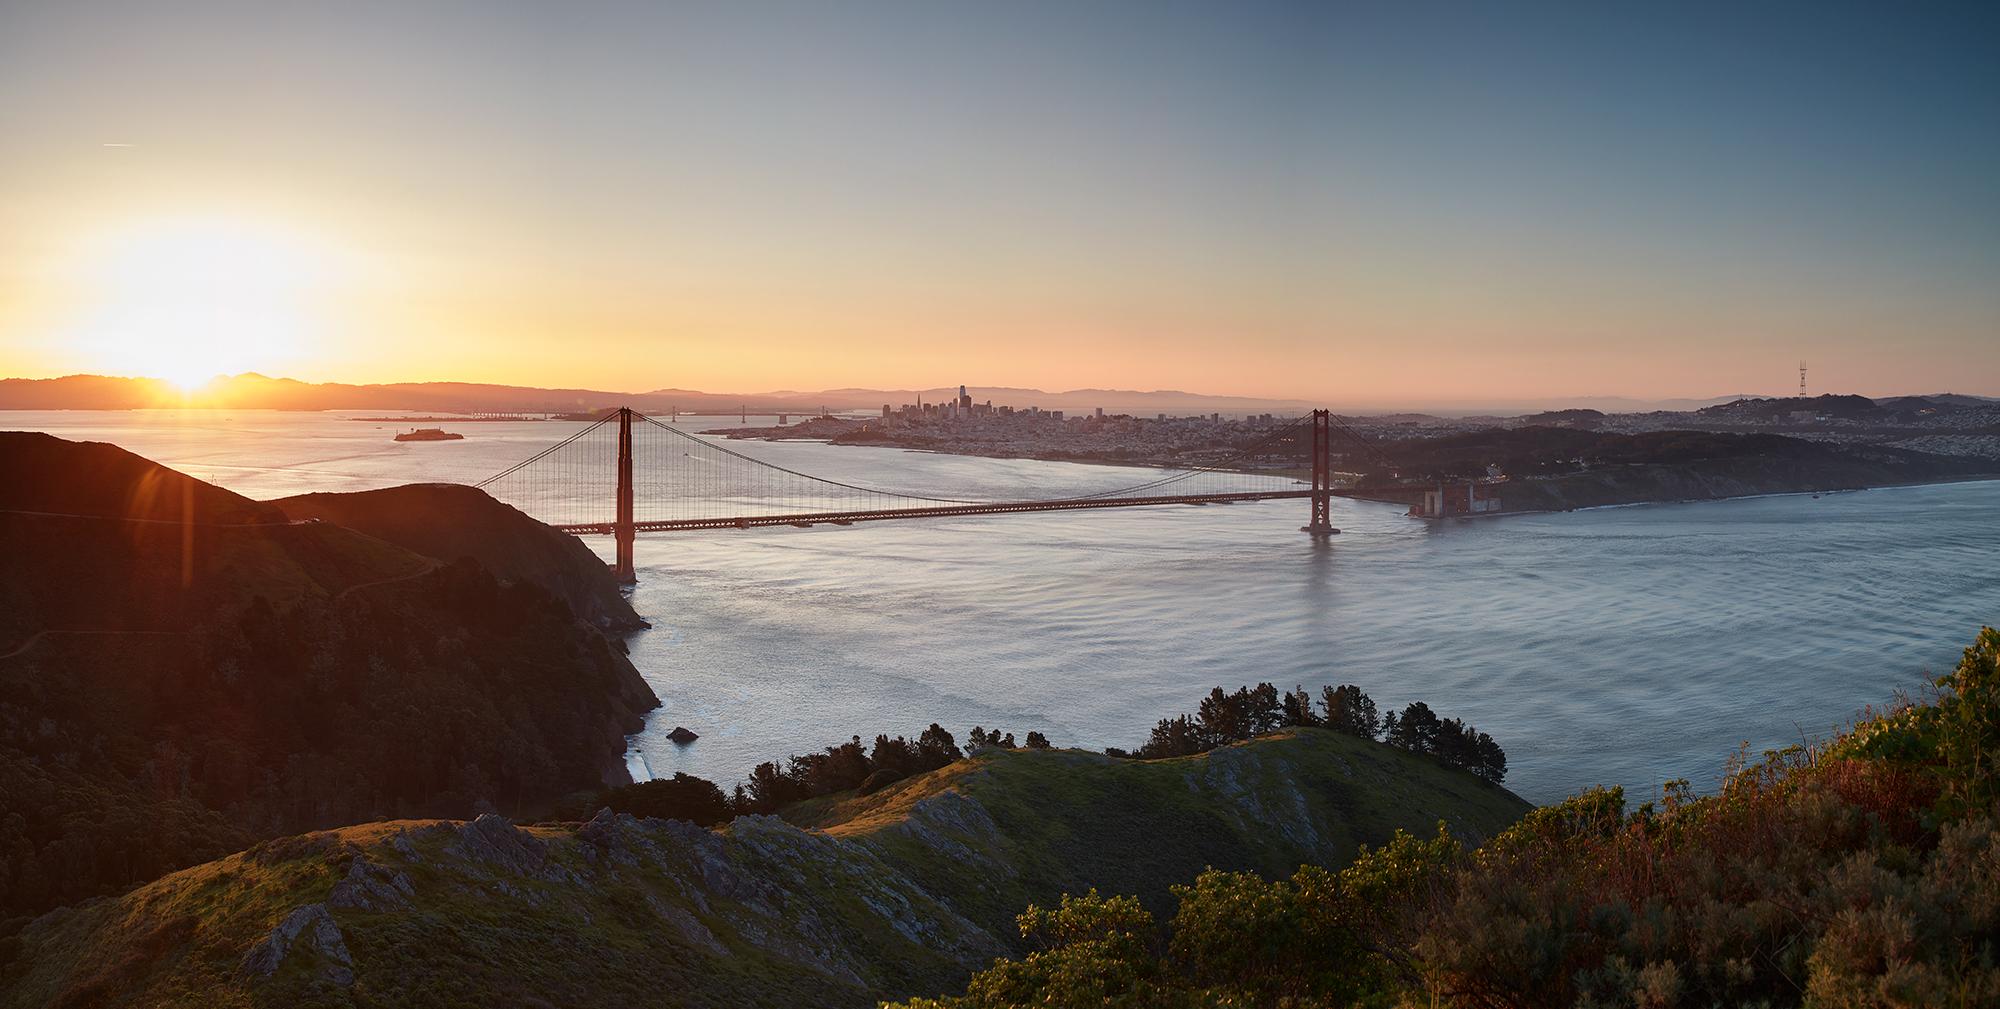 Golden Gate Bridge (glass mounted 58" x 110") - photograph of iconic landmark